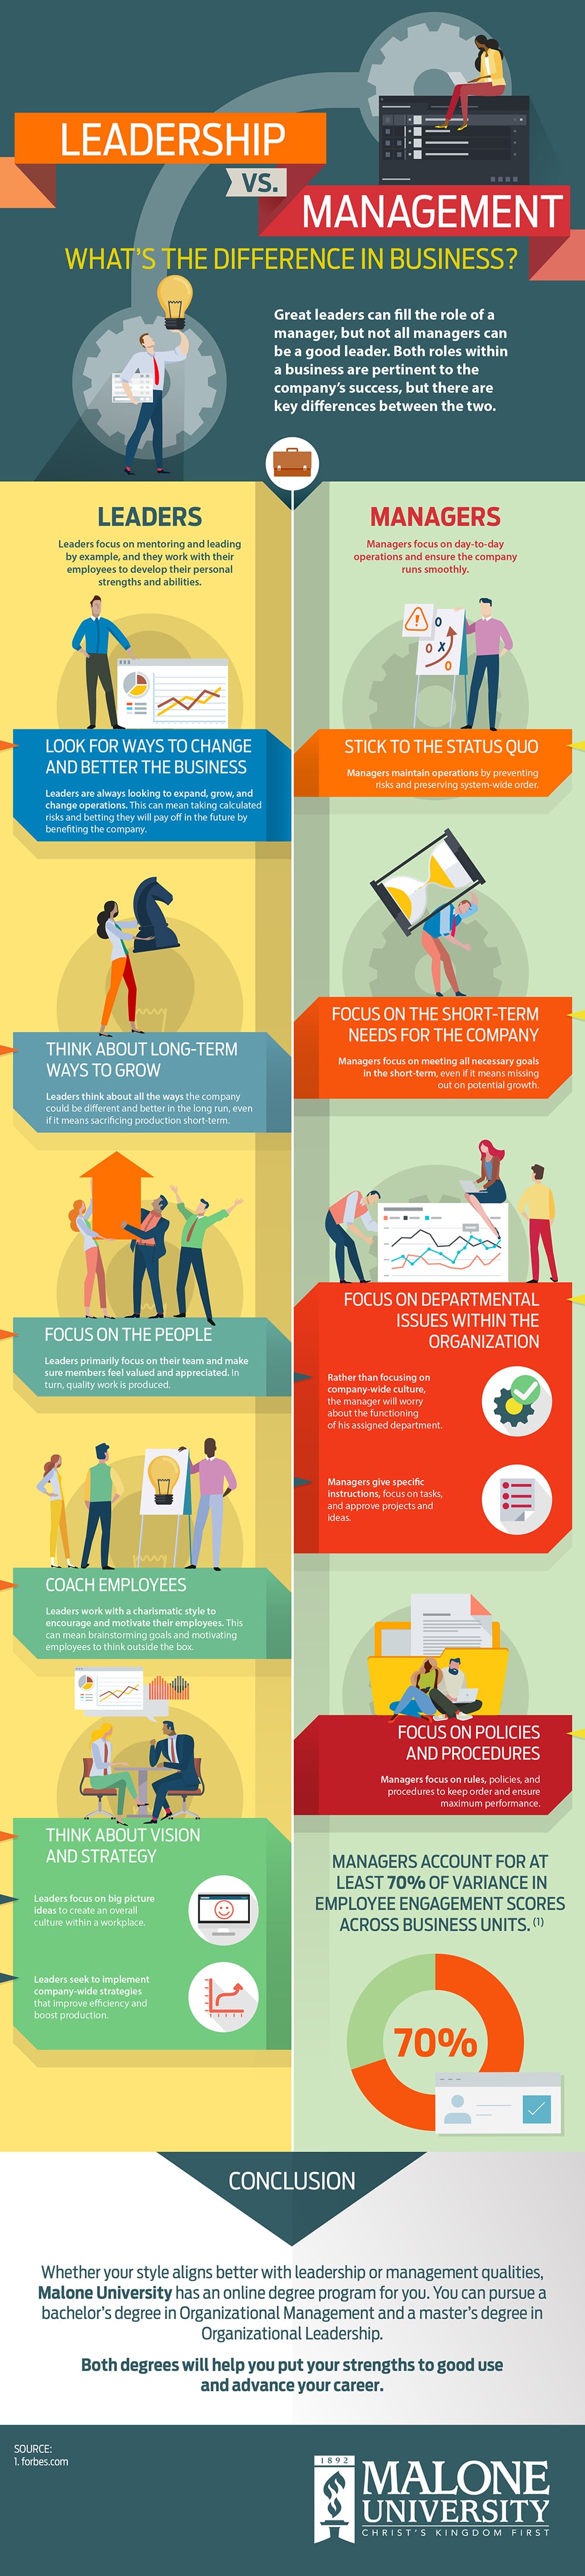 Leadership vs Management Infographic Image